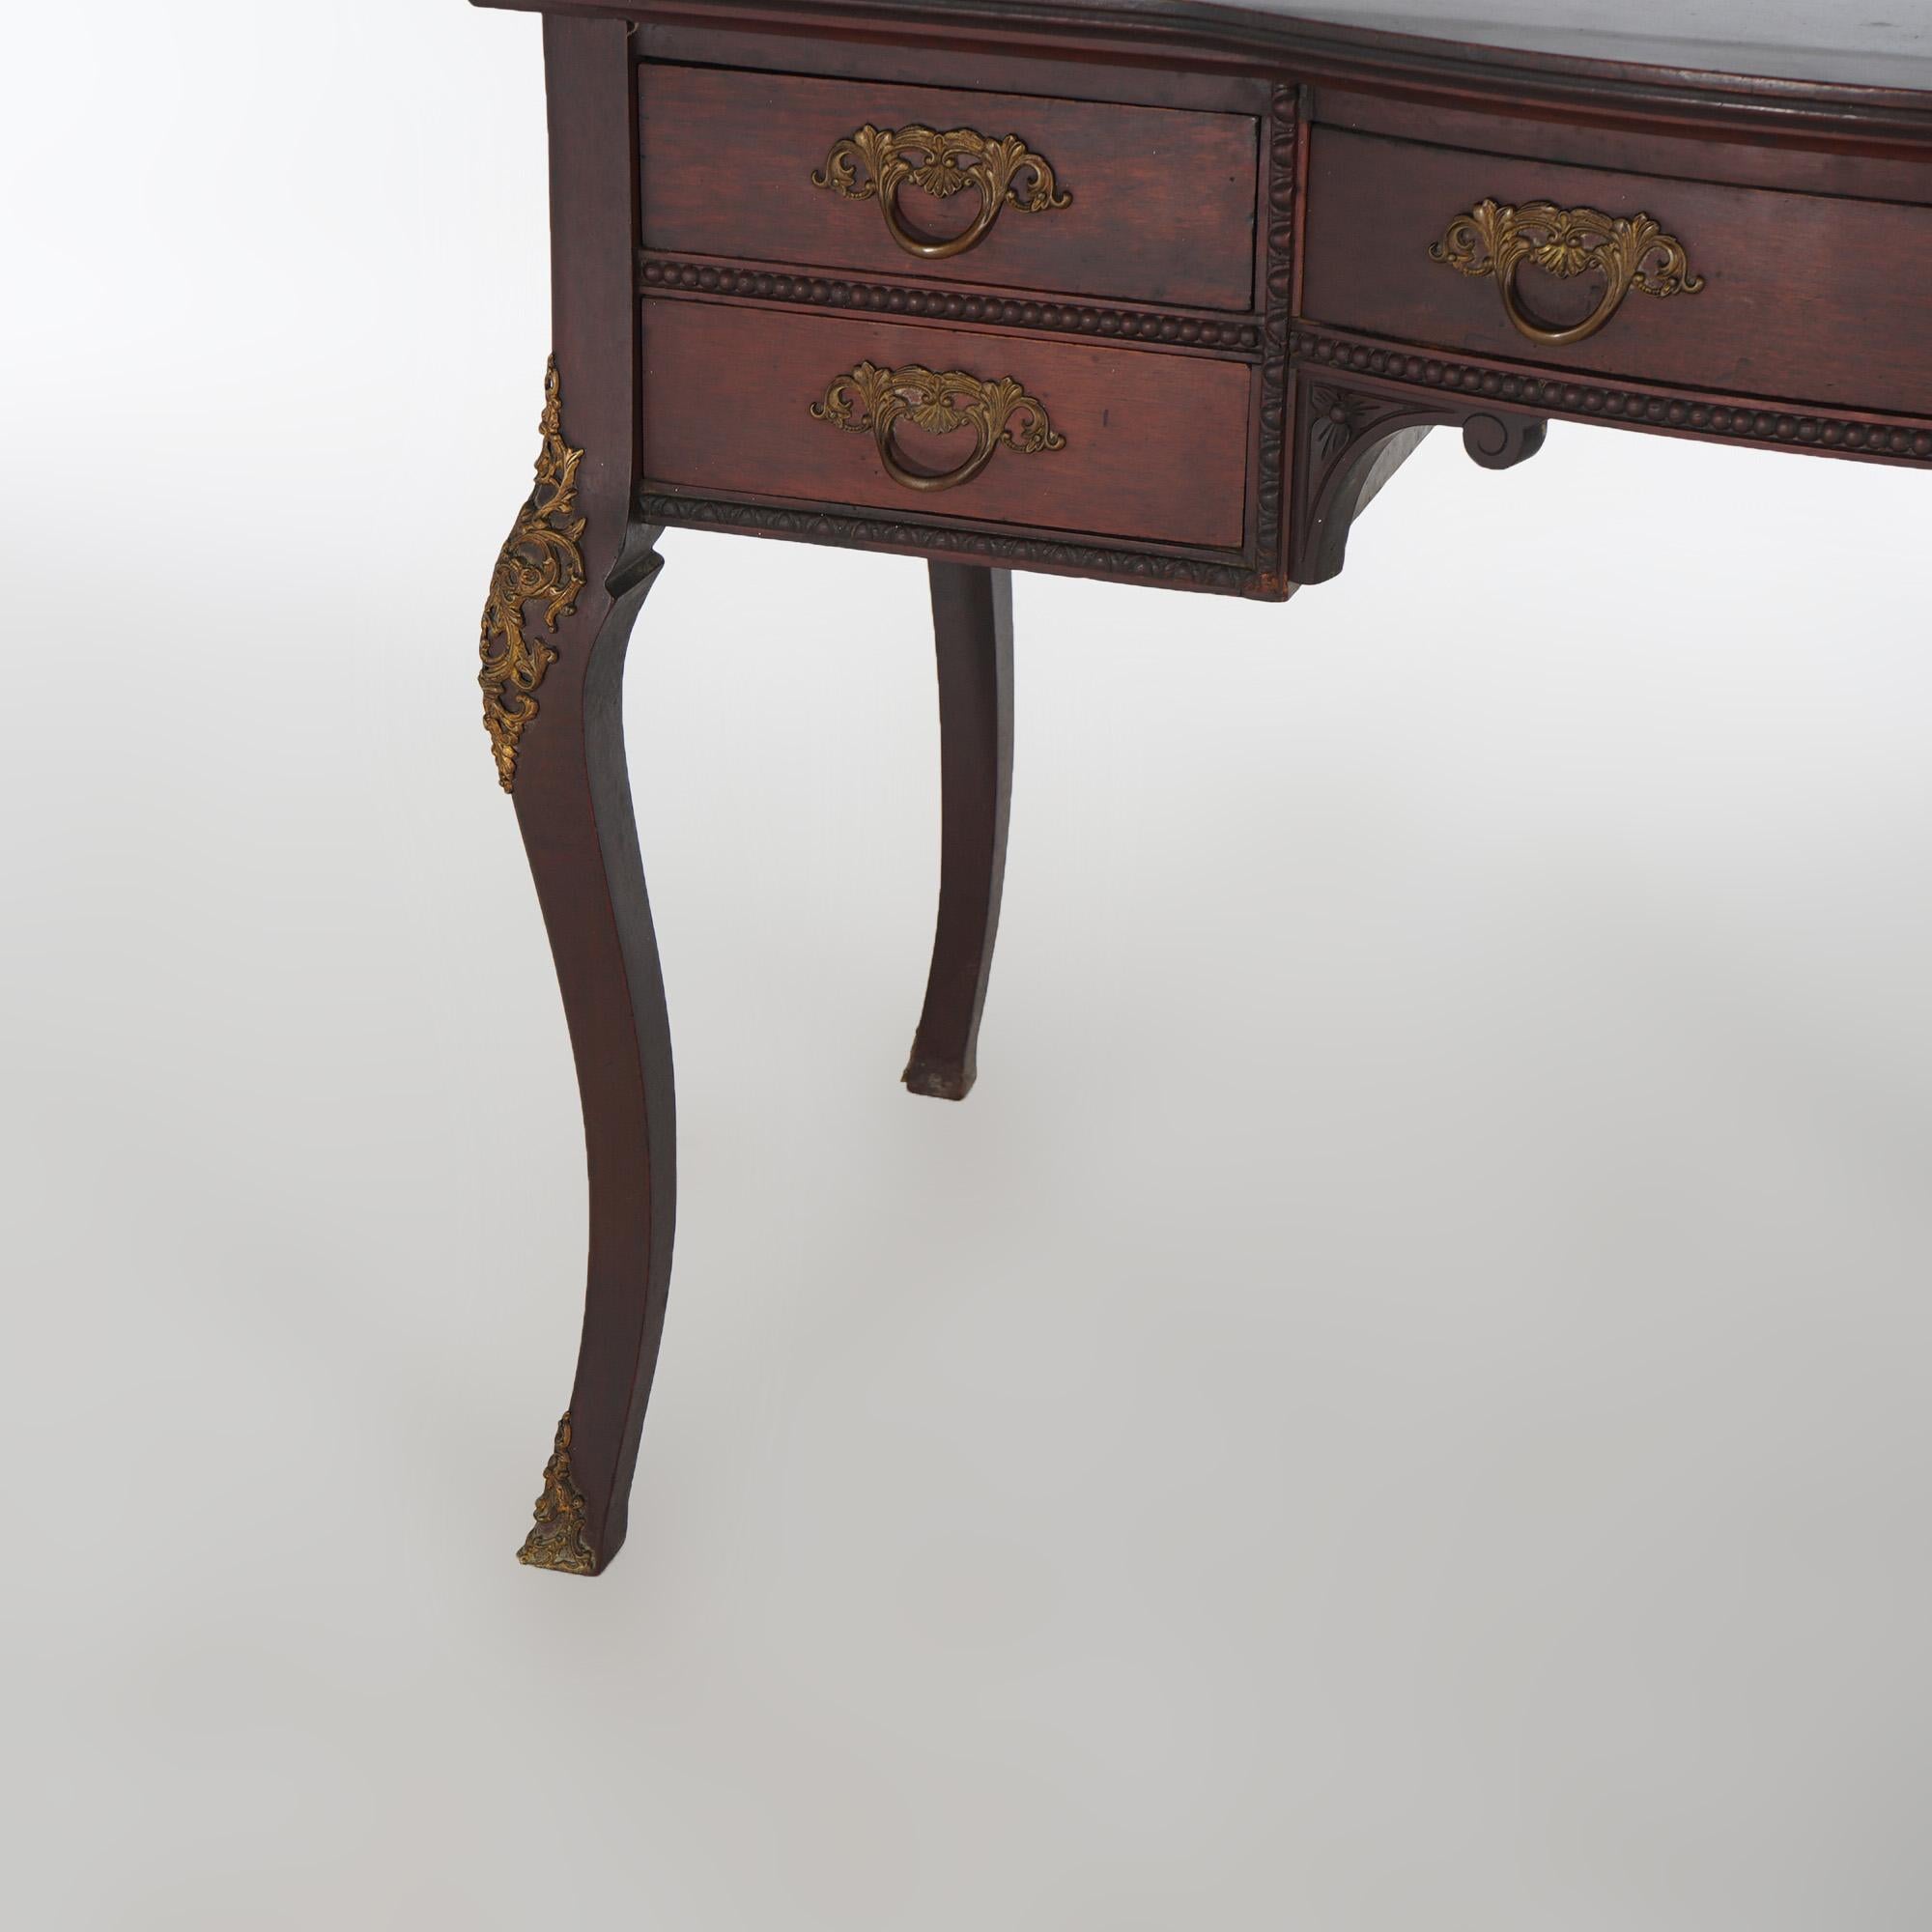 Antique French Mahogany & Ormolu Bureau Plat Writing Desk C1910 For Sale 9